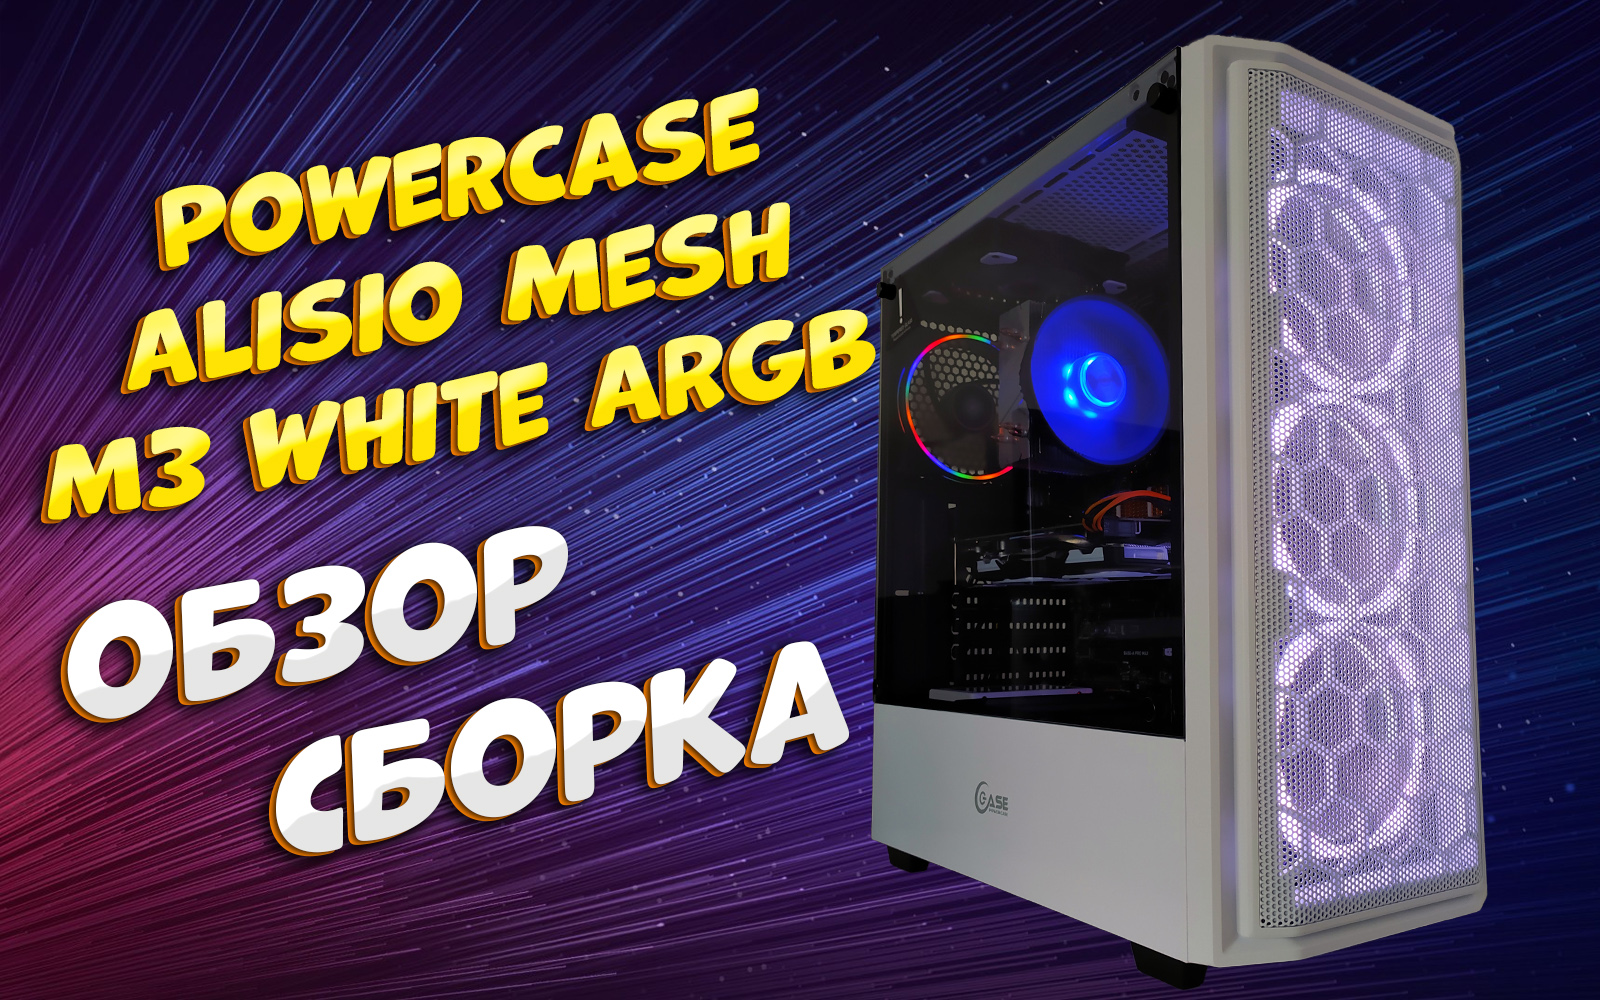 PowerCase Alisio Mesh M3 White ARGB | Обзор | Сборка